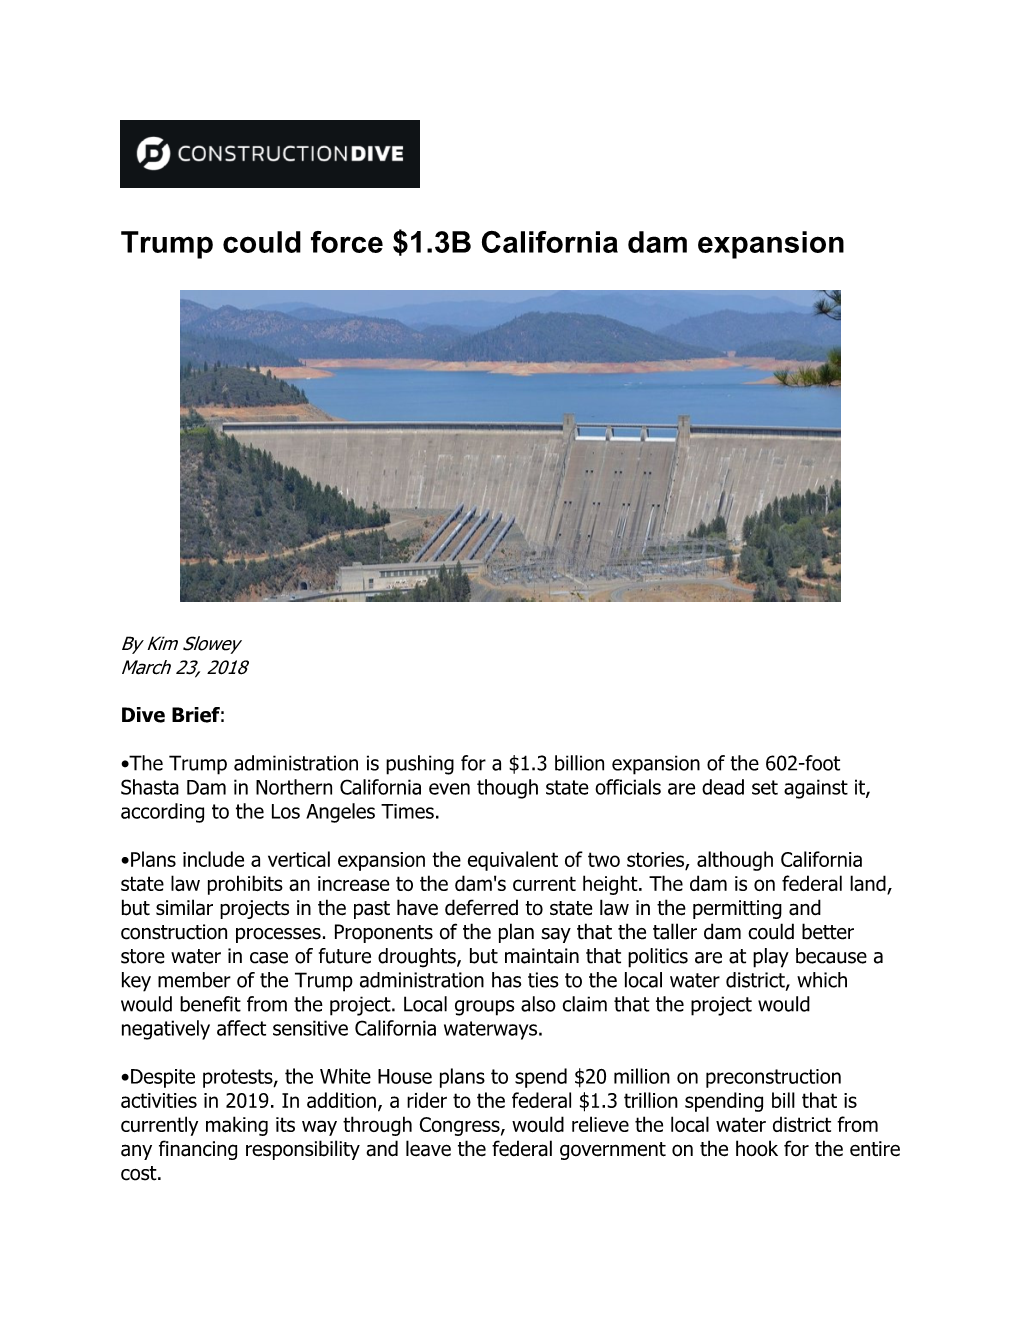 Trump Could Force 1.4 Billion Dollar Shasta Dam Raise